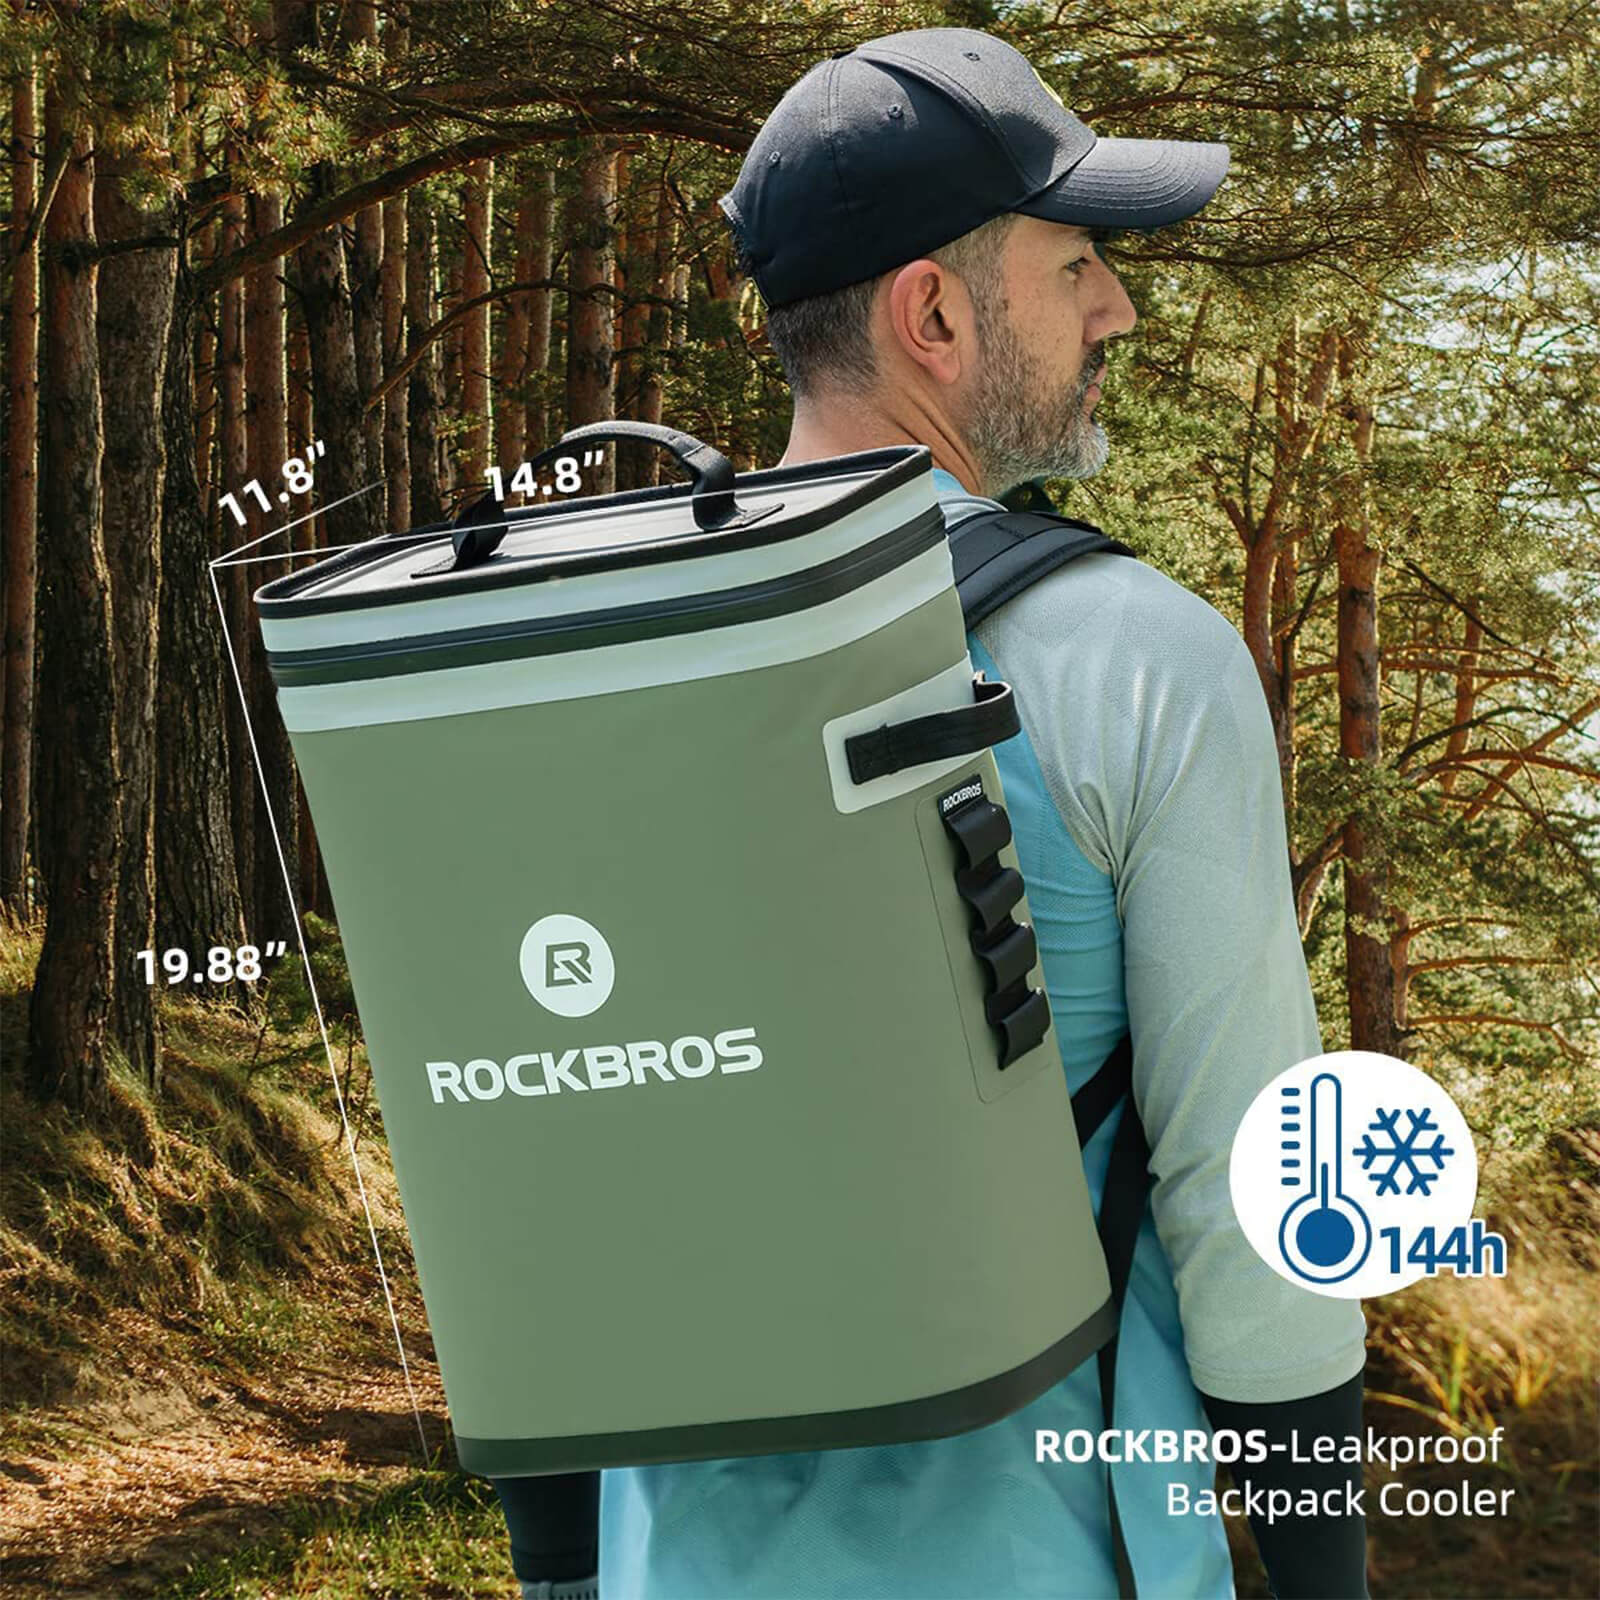 ROCKBROS Outdoor Cooler Bag Waterproof Backpack for Camping Fishing Picnic